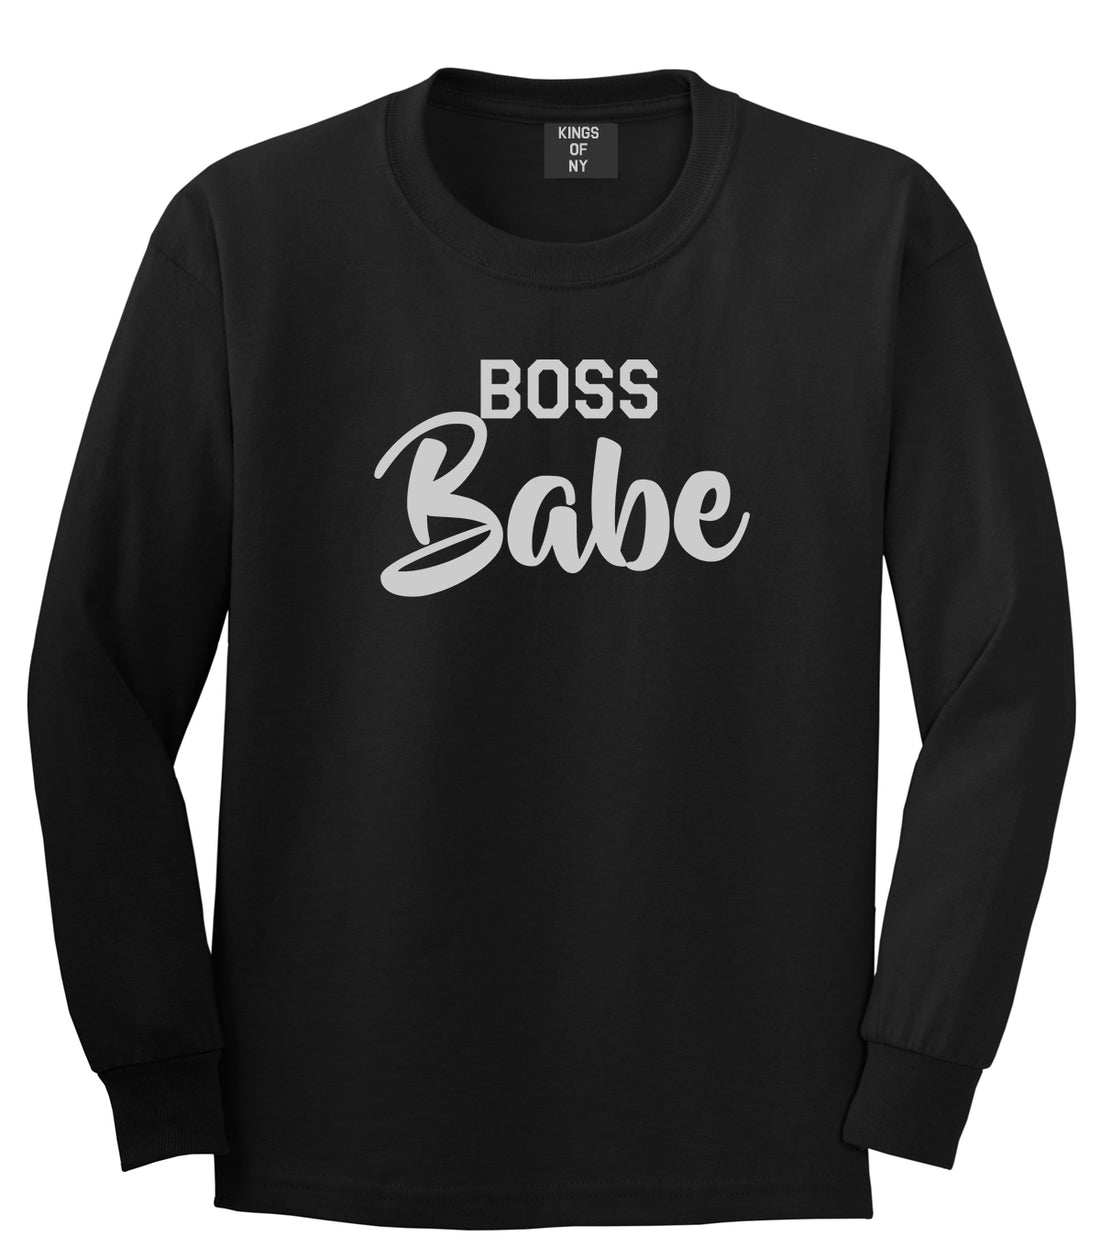 Boss Babe Mens Black Long Sleeve T-Shirt by KINGS OF NY